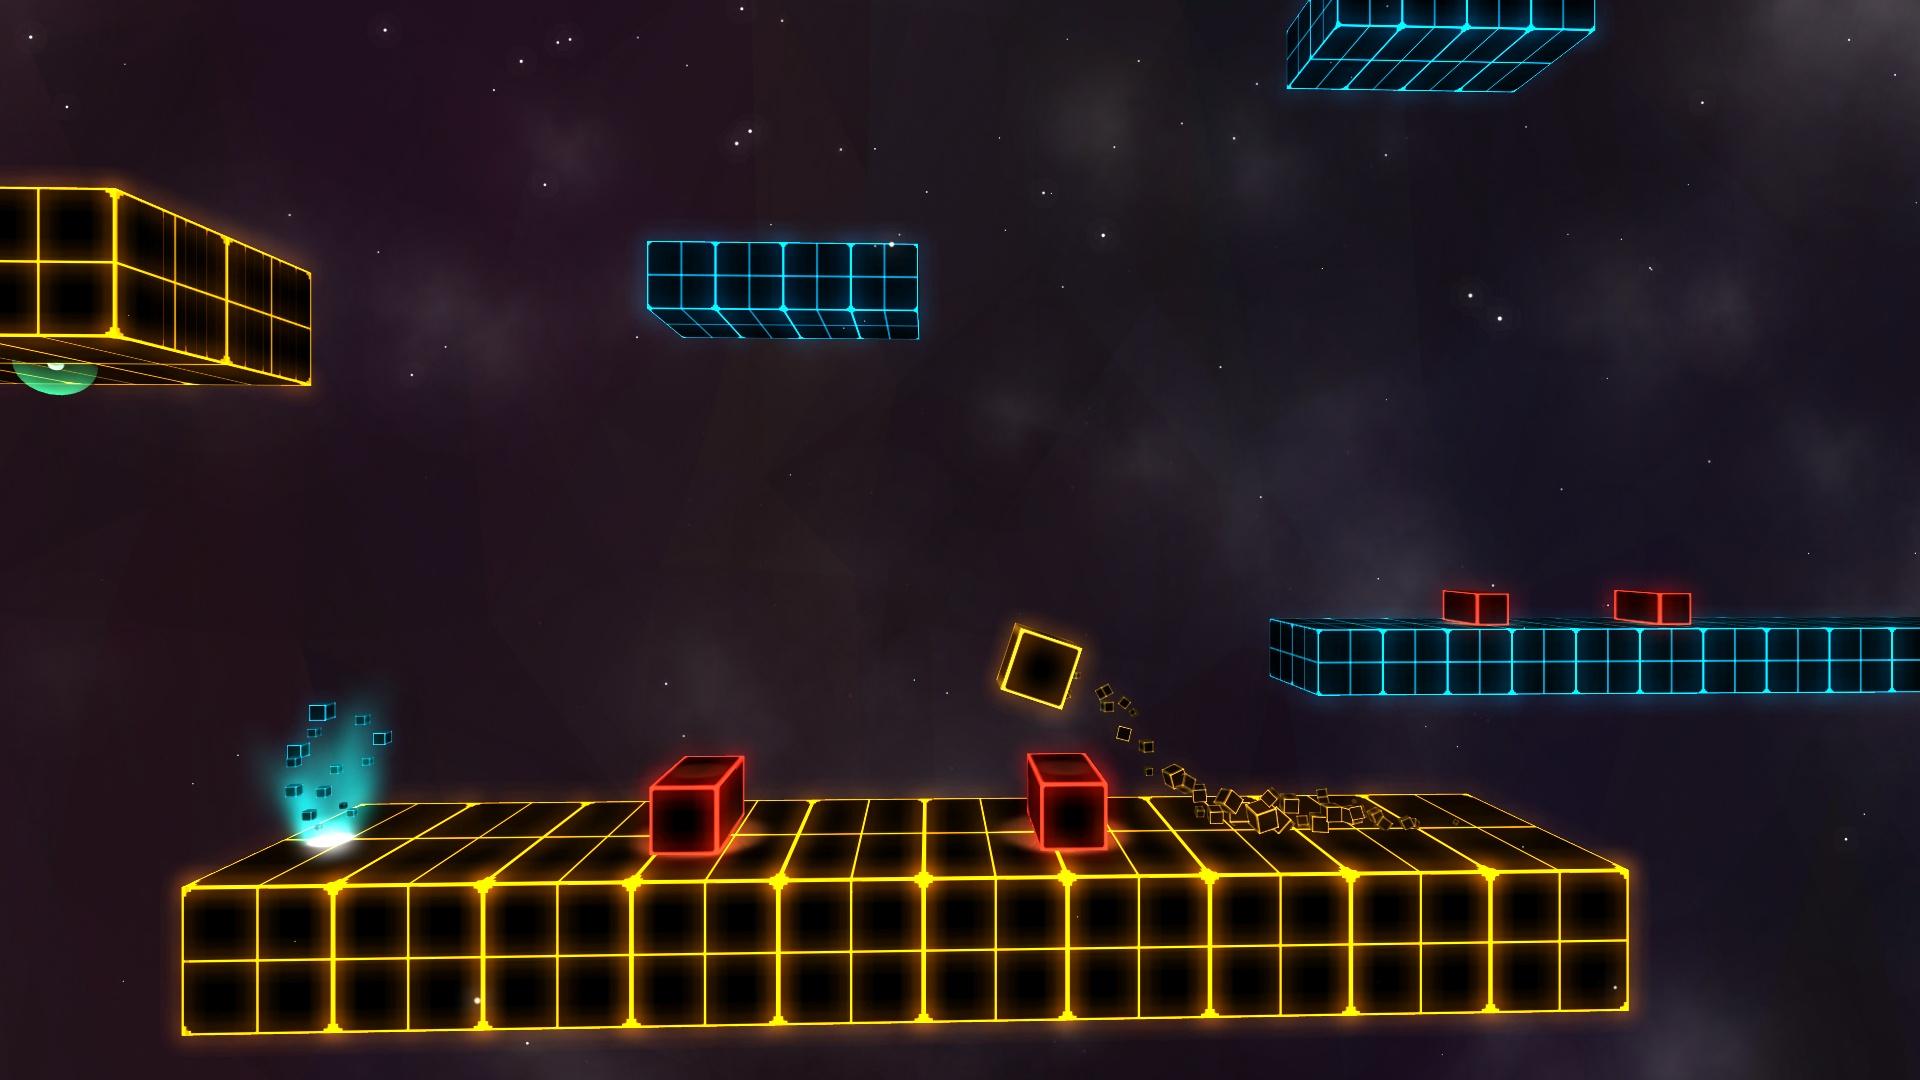 Screenshot №9 from game Cube Runner